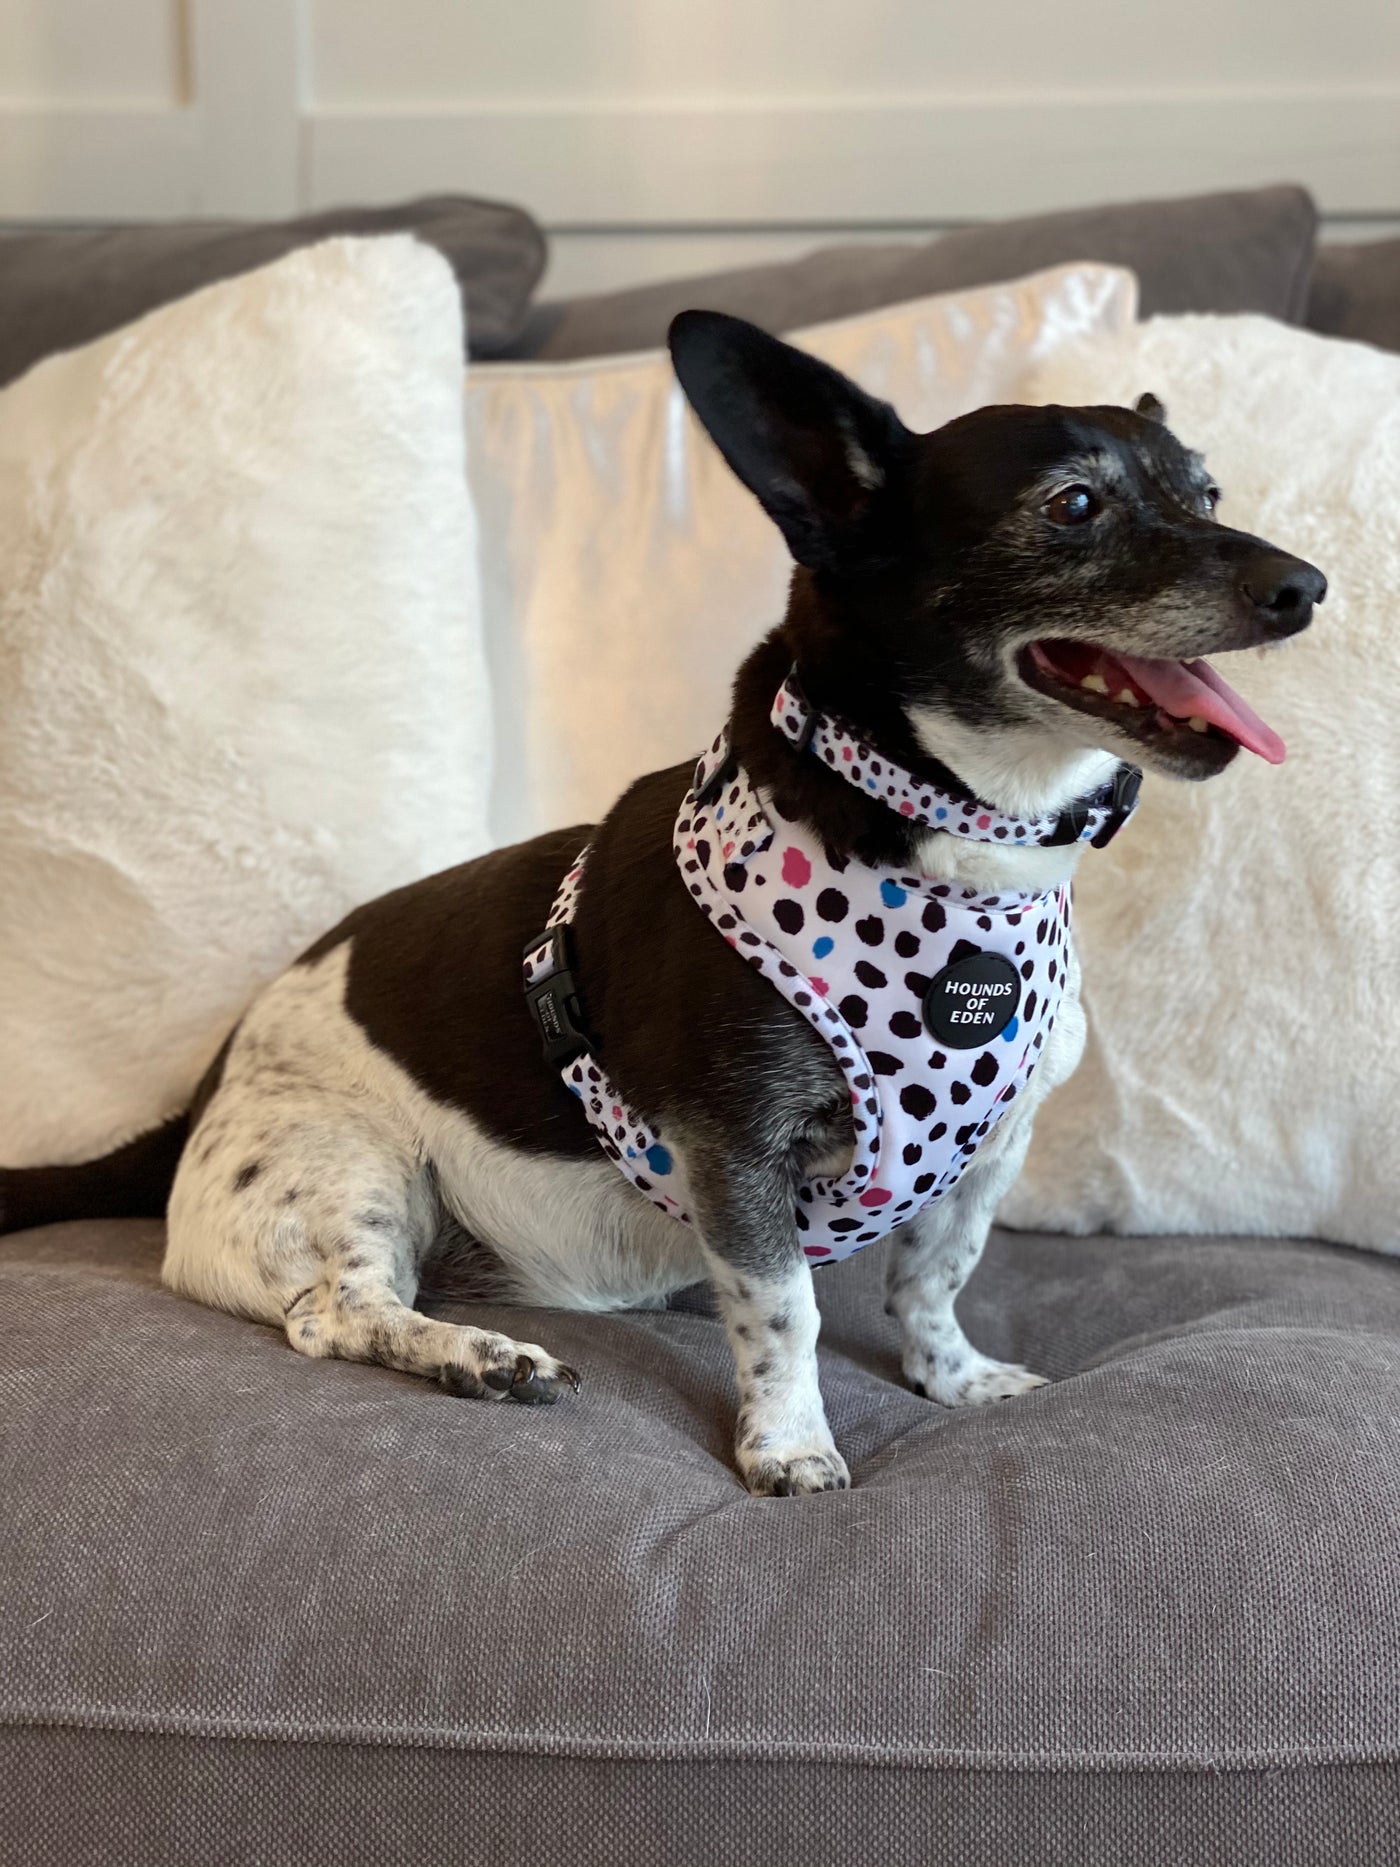 'Spot the Dog' - Pink, Blue & Black Spotted Dog Collar